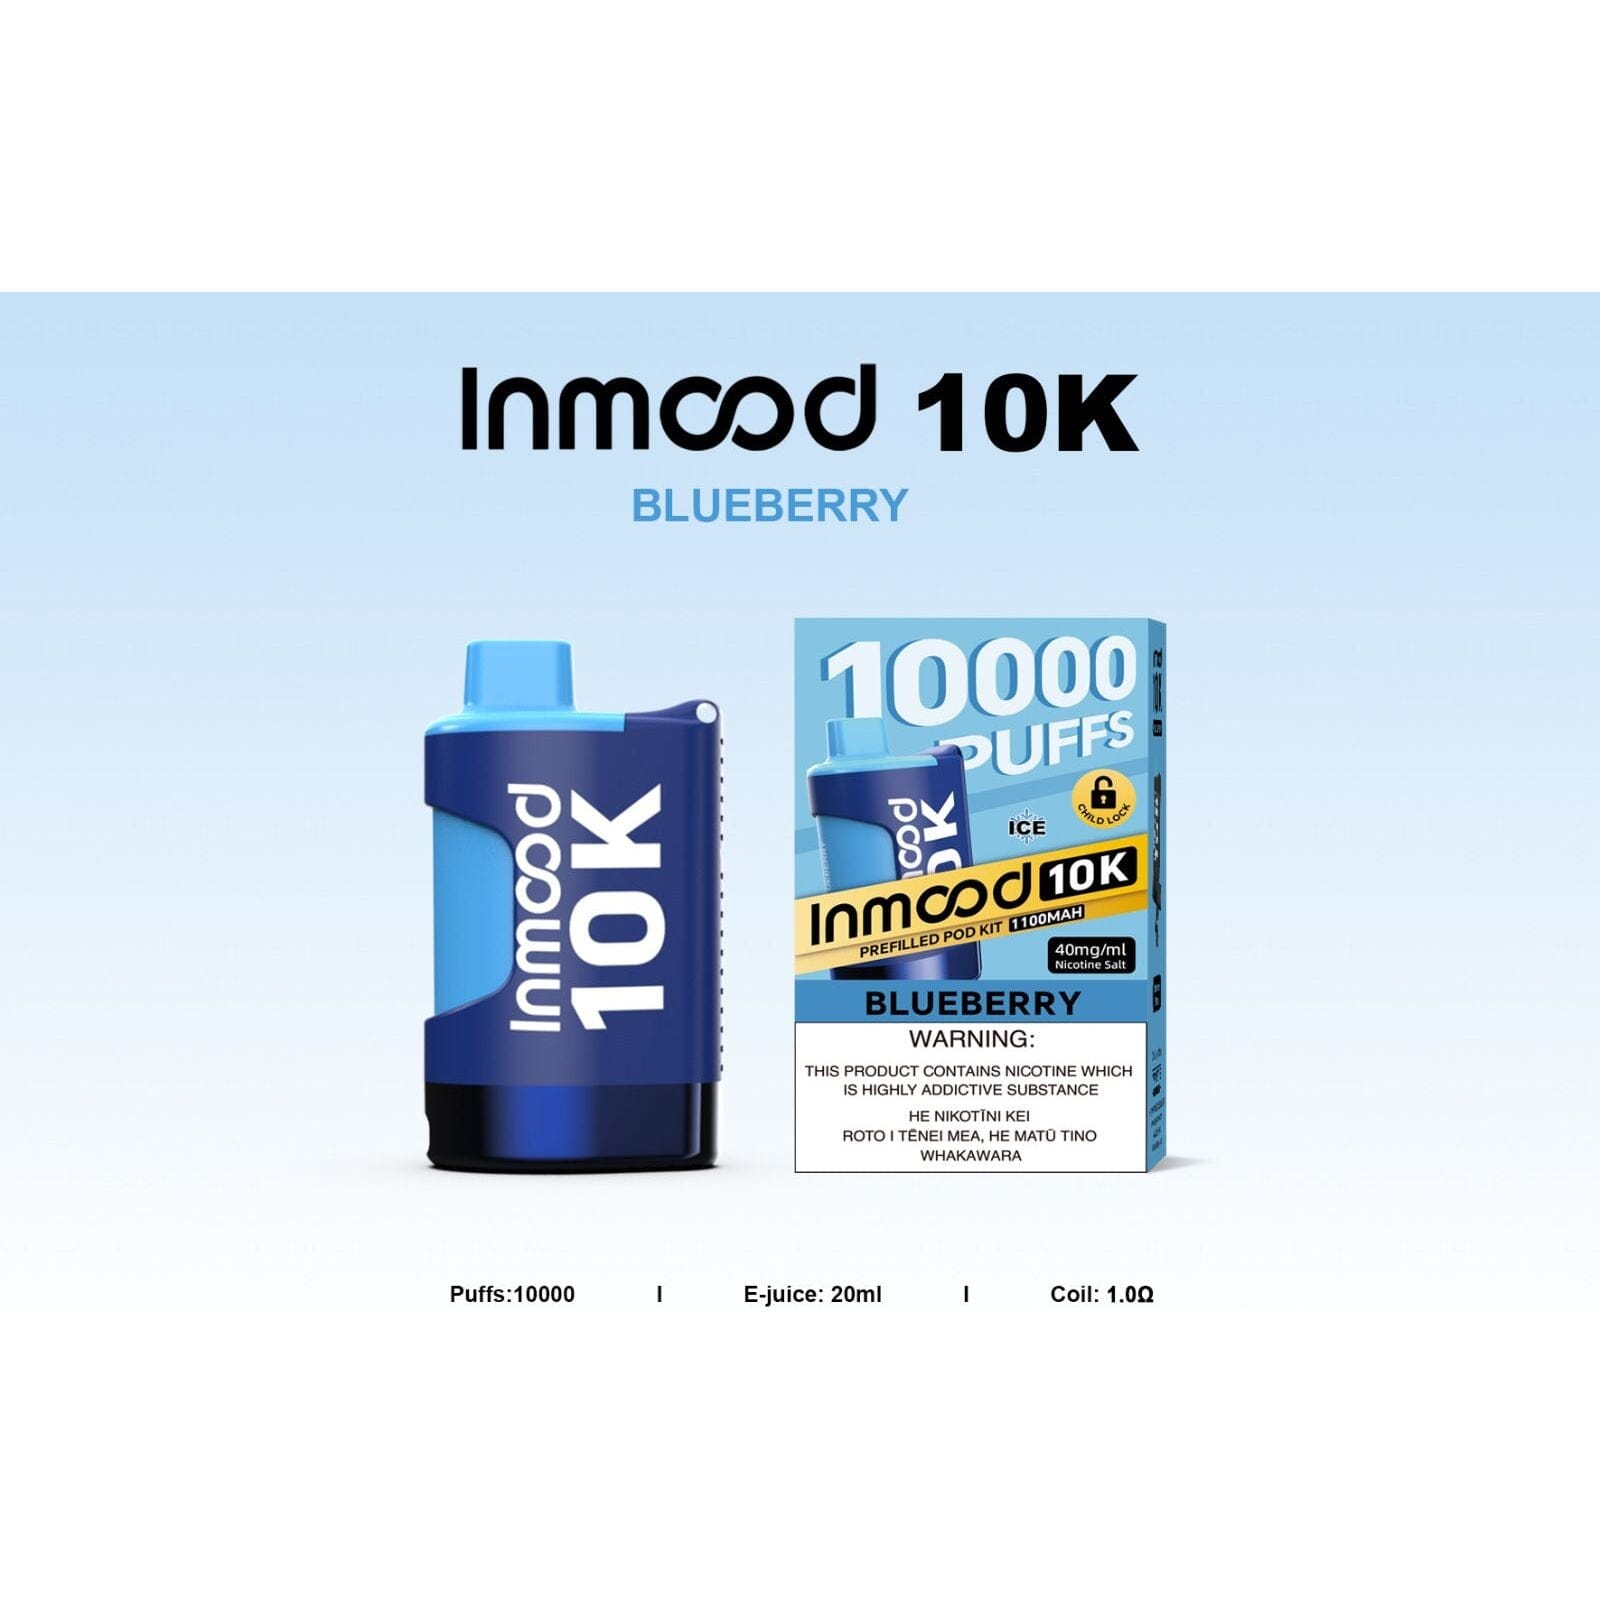 Inmood 10K Prefilled Pod Kit - Blueberry - Vapoureyes